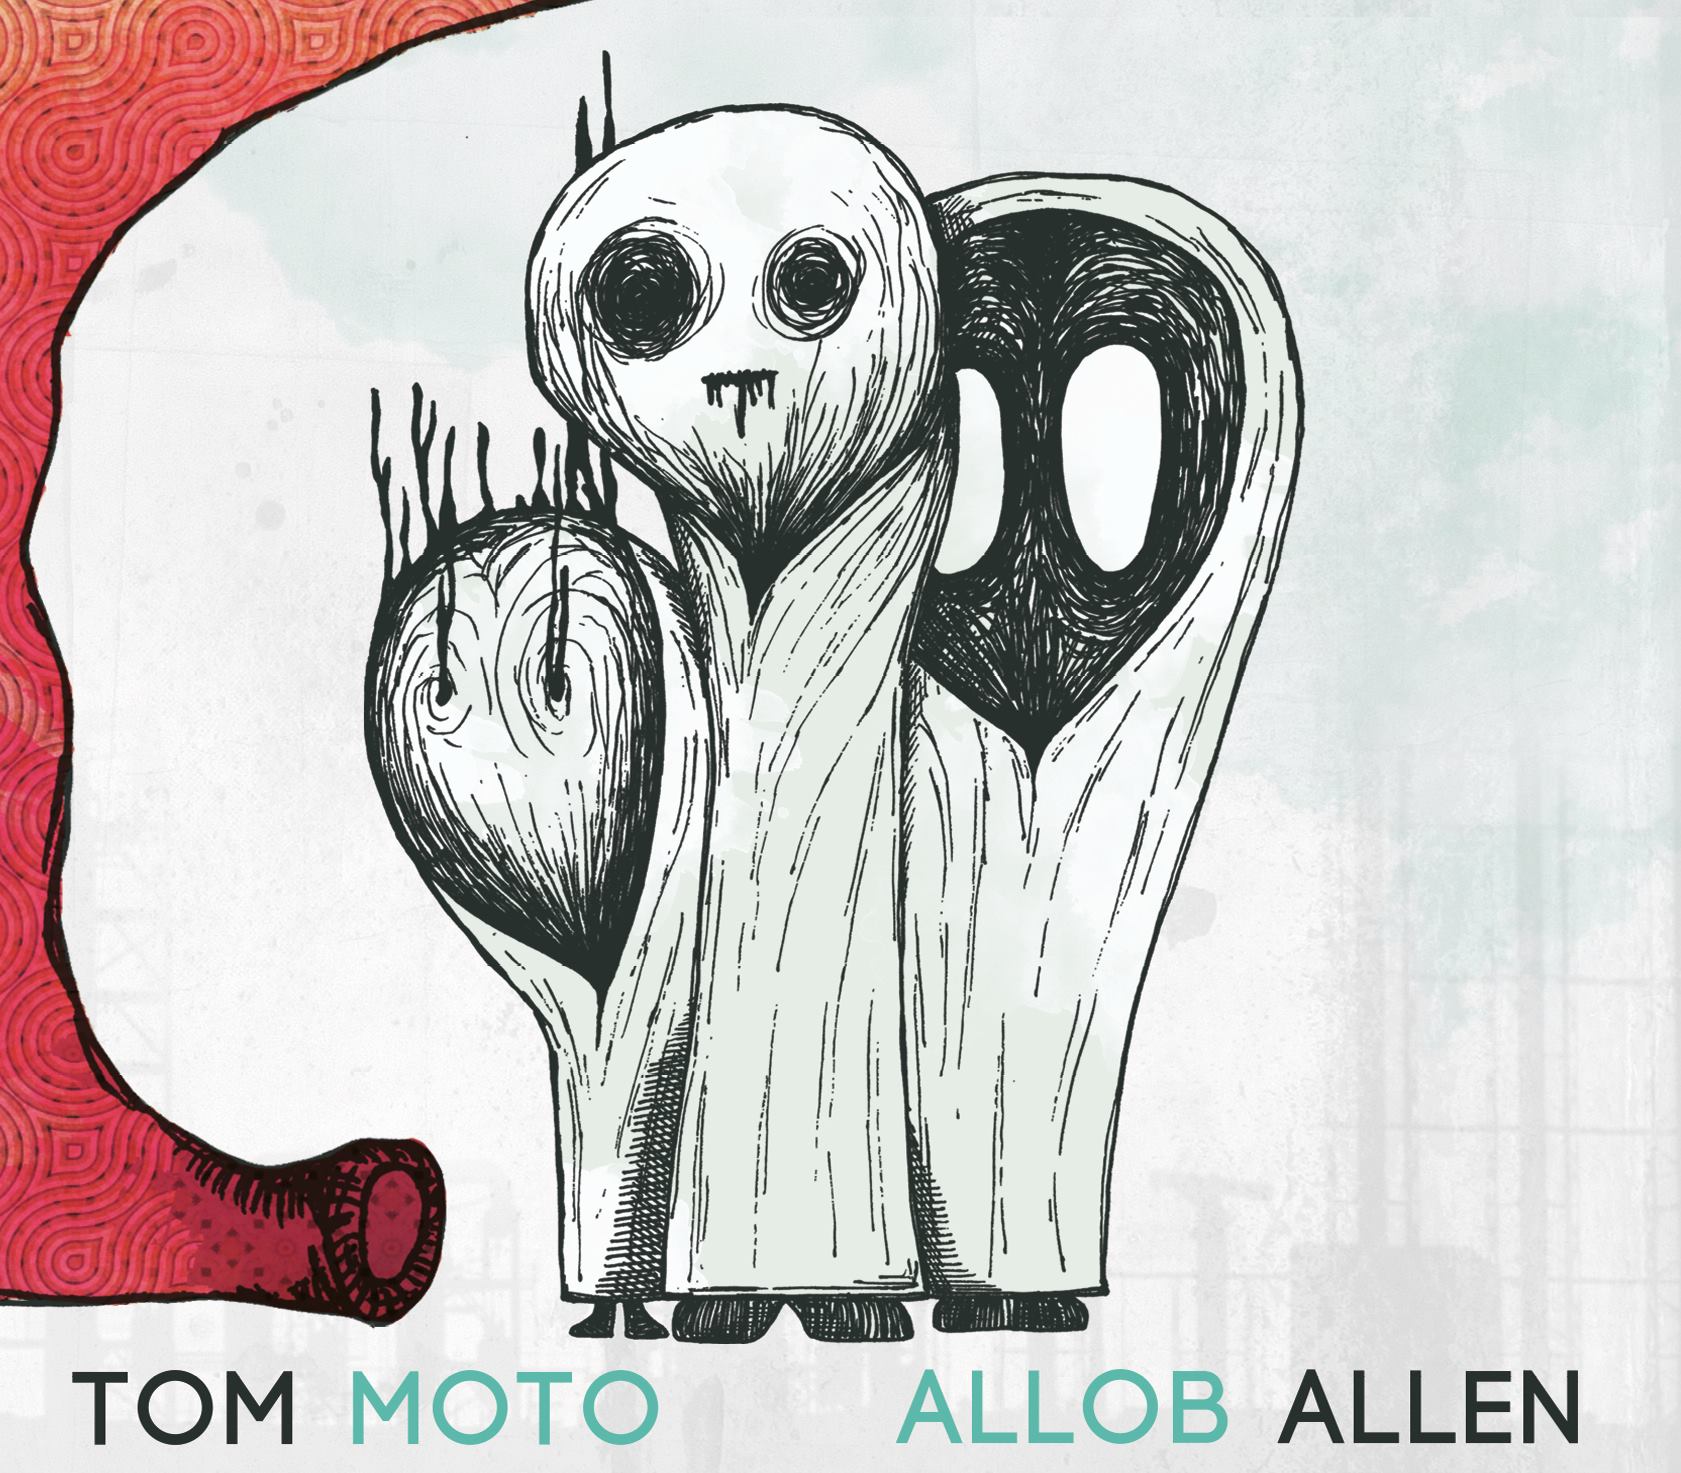 Tom Moto — Allob Allen